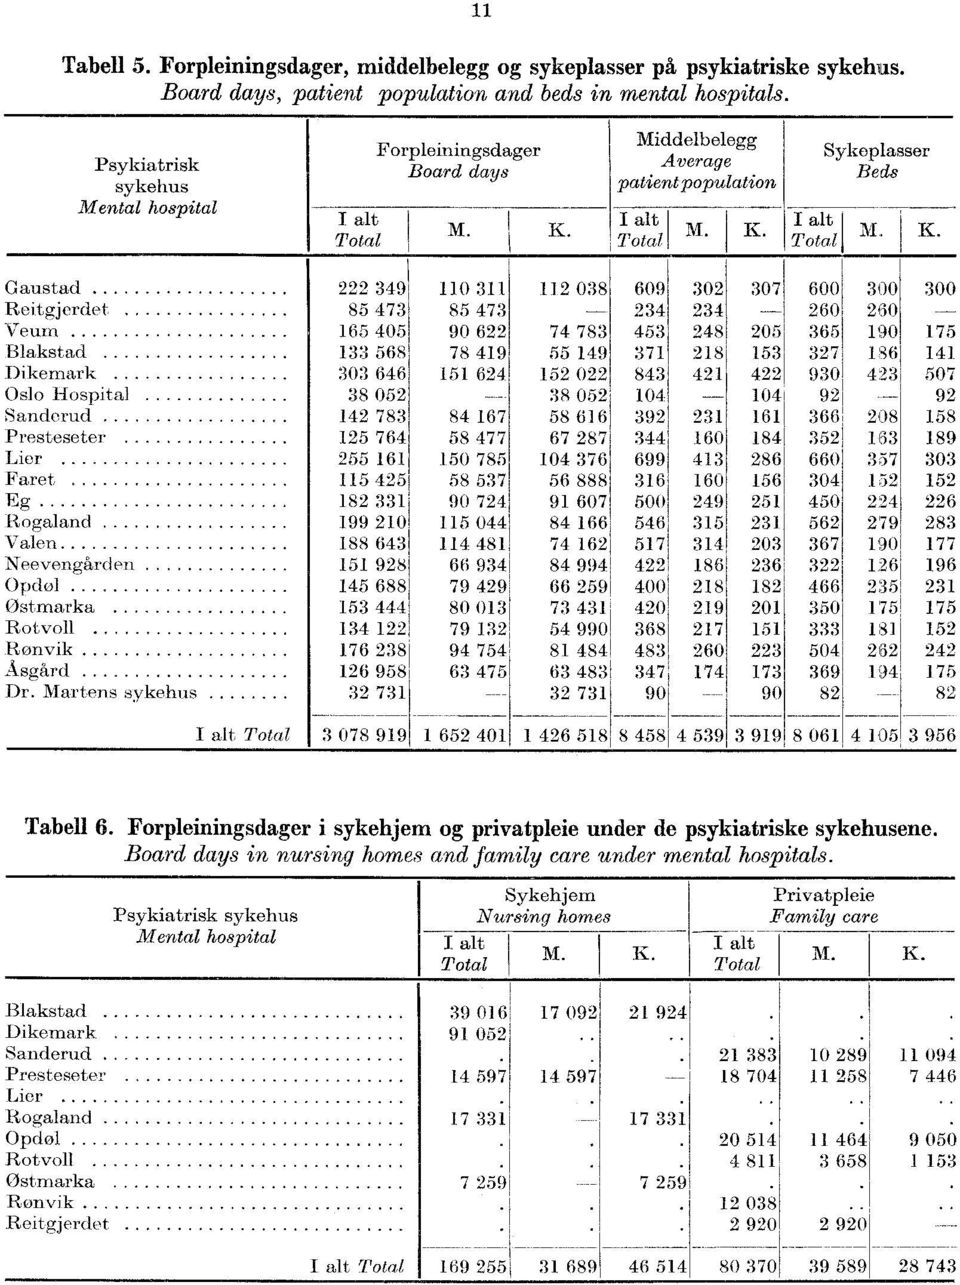 Middelbelegg Average patientpopulation M. Sykeplasser Beds M. K.